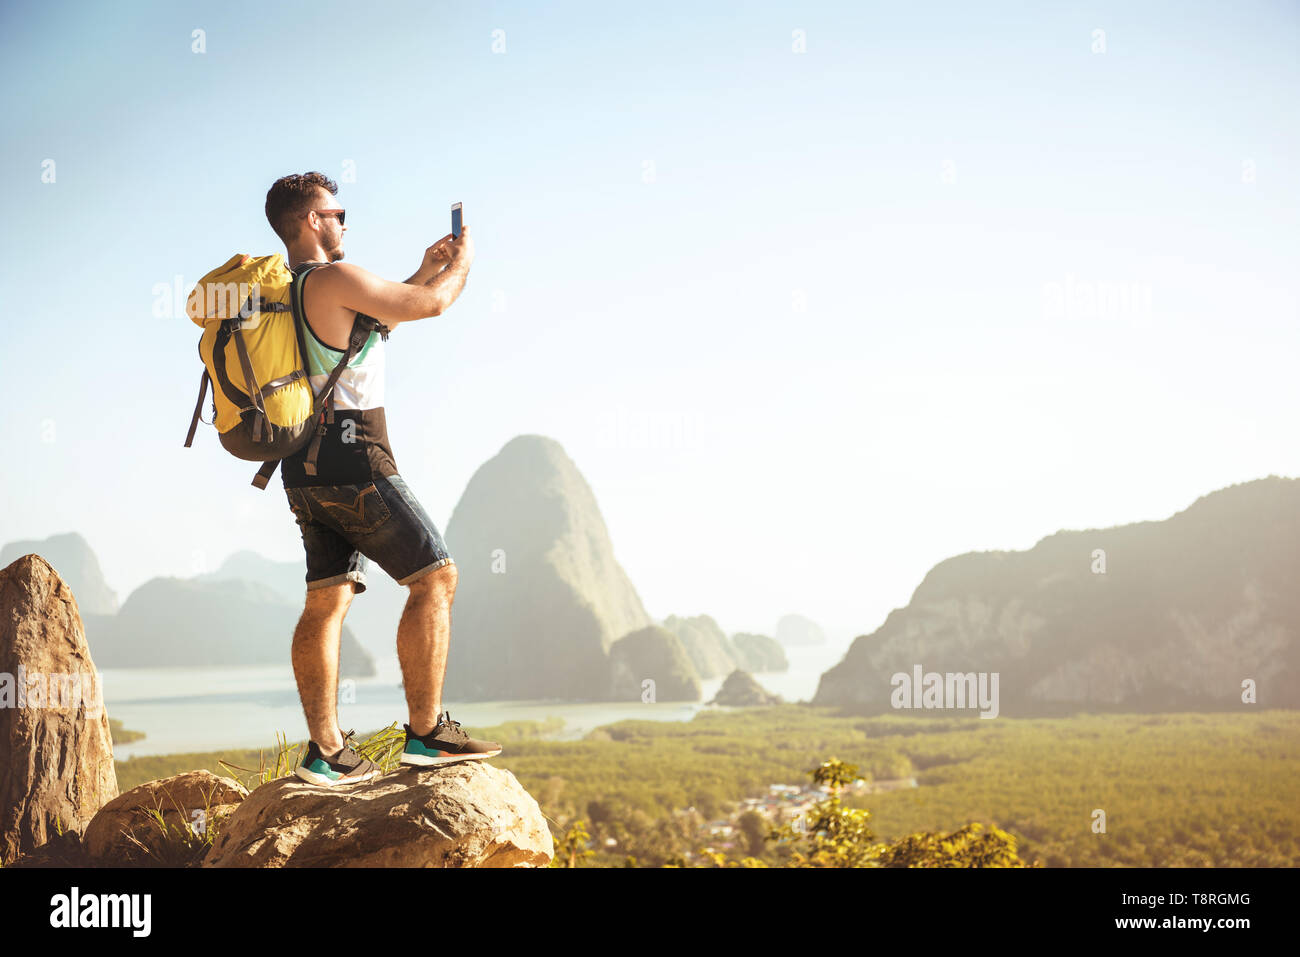 Backpacker tourist sorge su big rock e prende mobile photo a Viewpoint Foto Stock